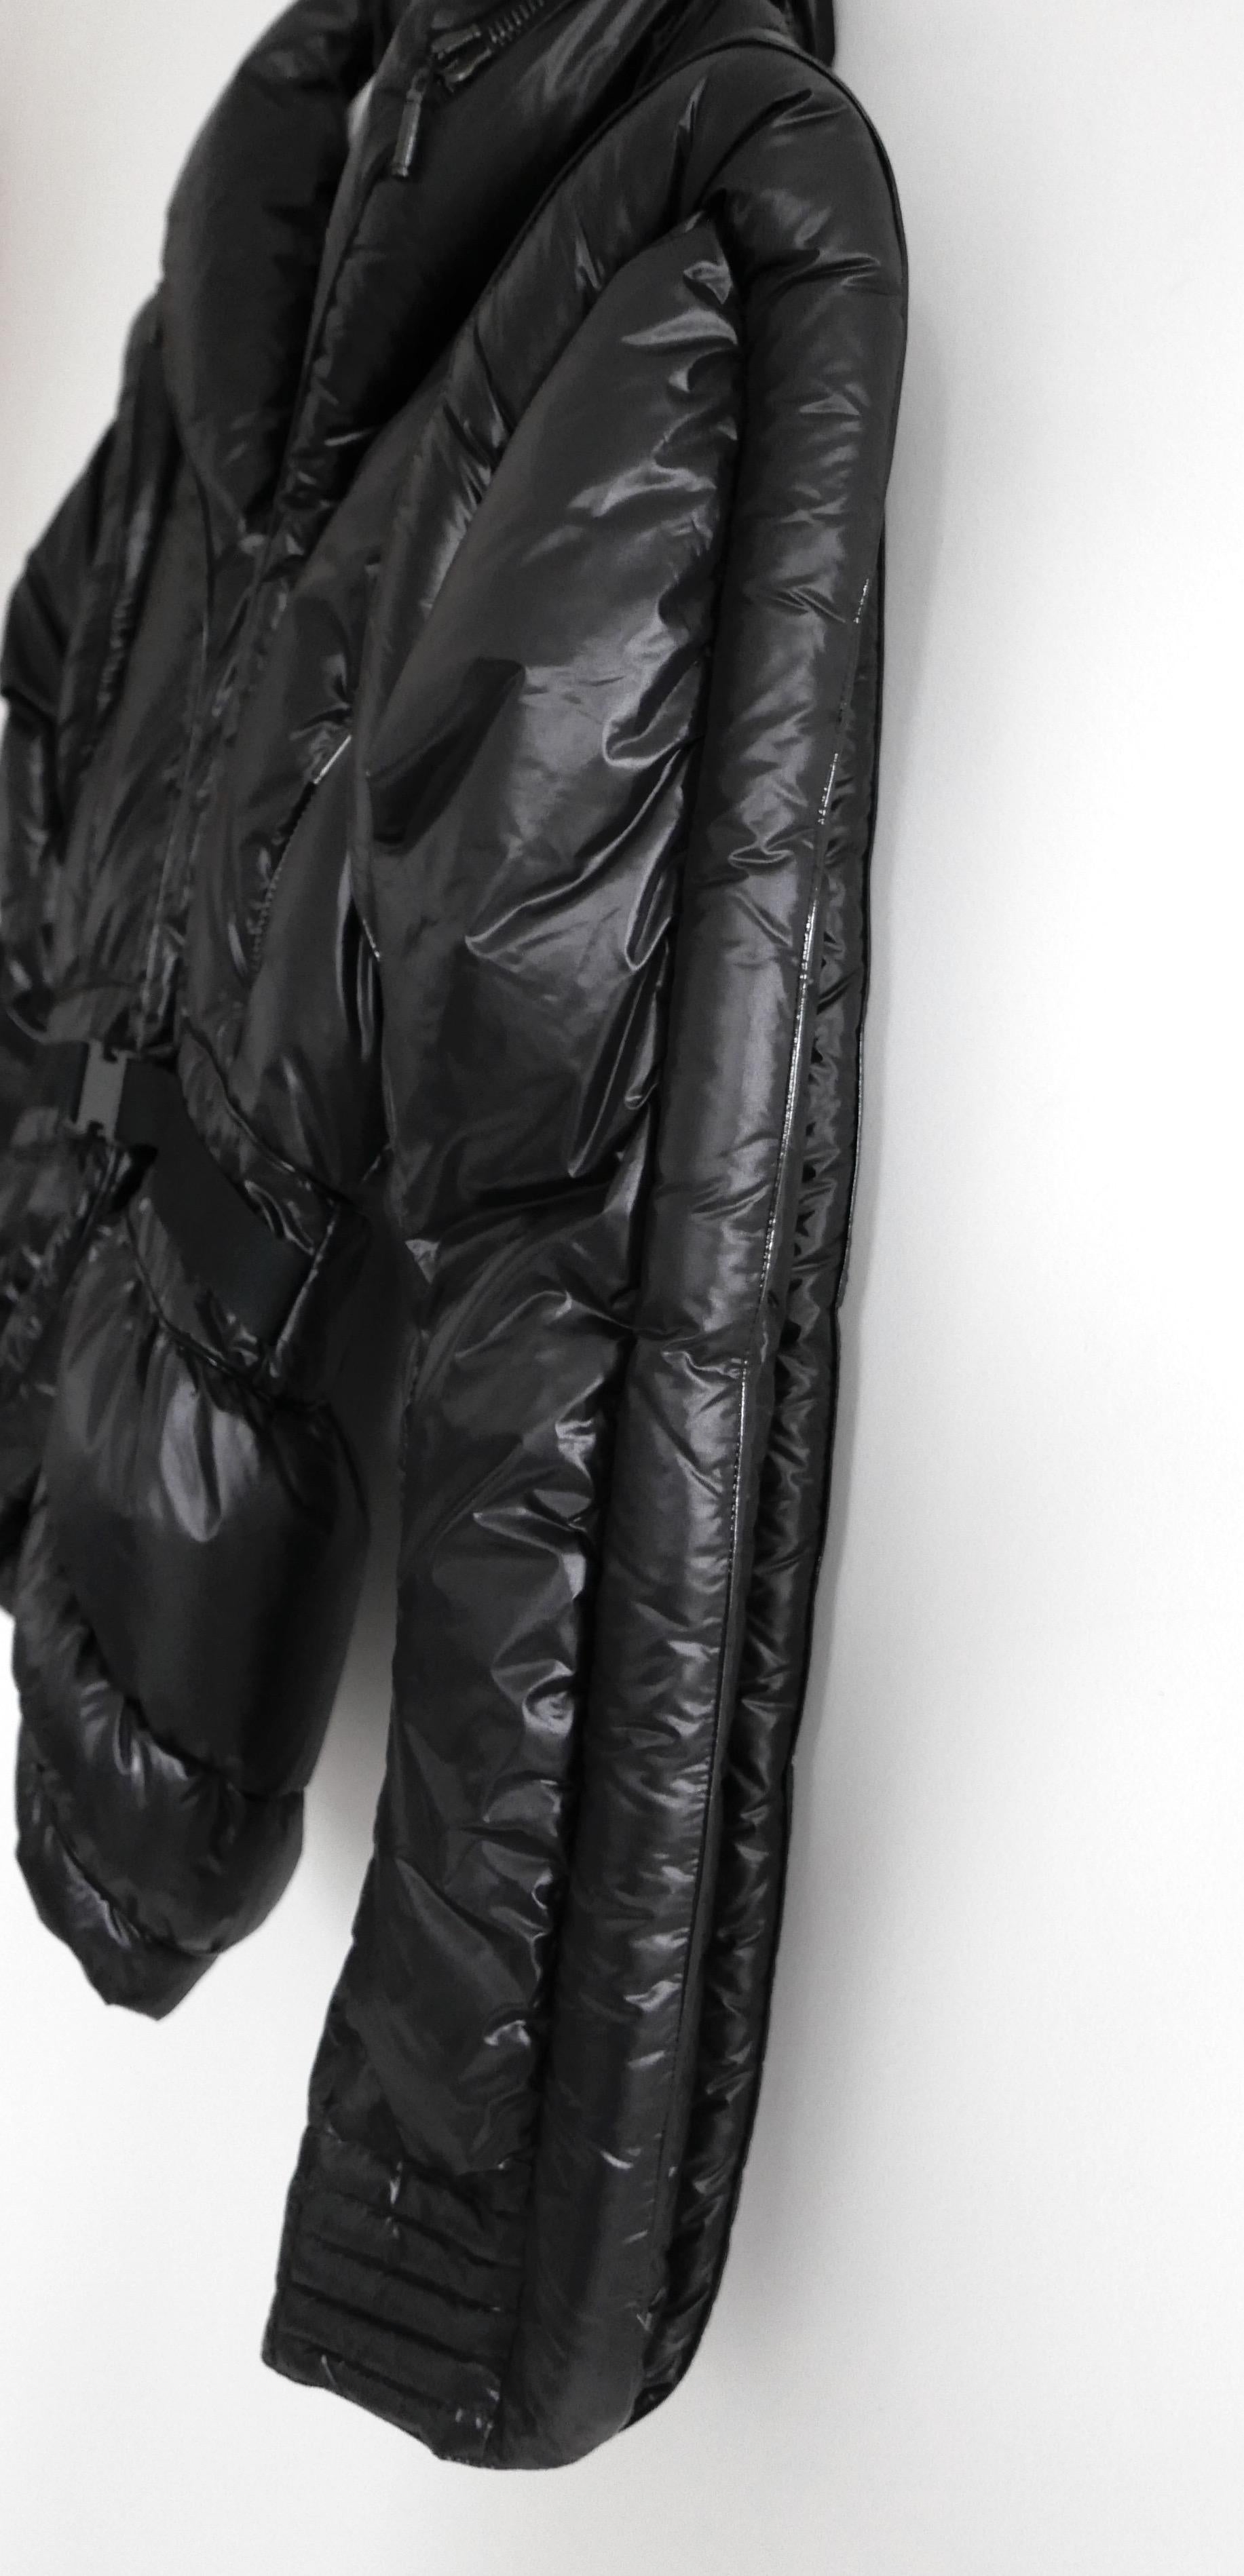 Emanuel Ungaro AW07 Black Sculptural Puffer Coat For Sale 3